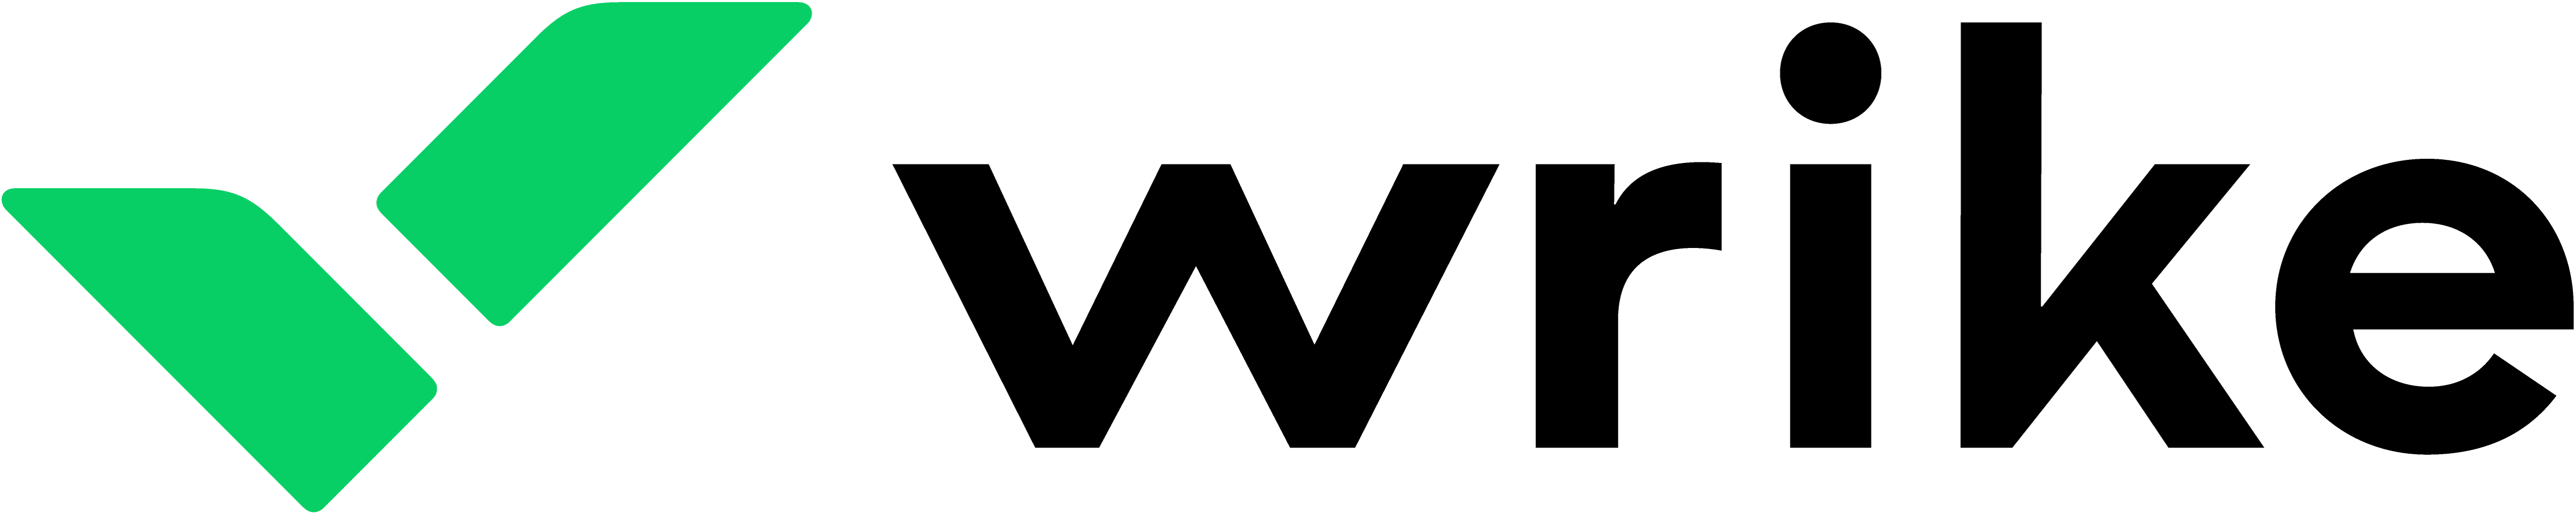 Wrike - Logo